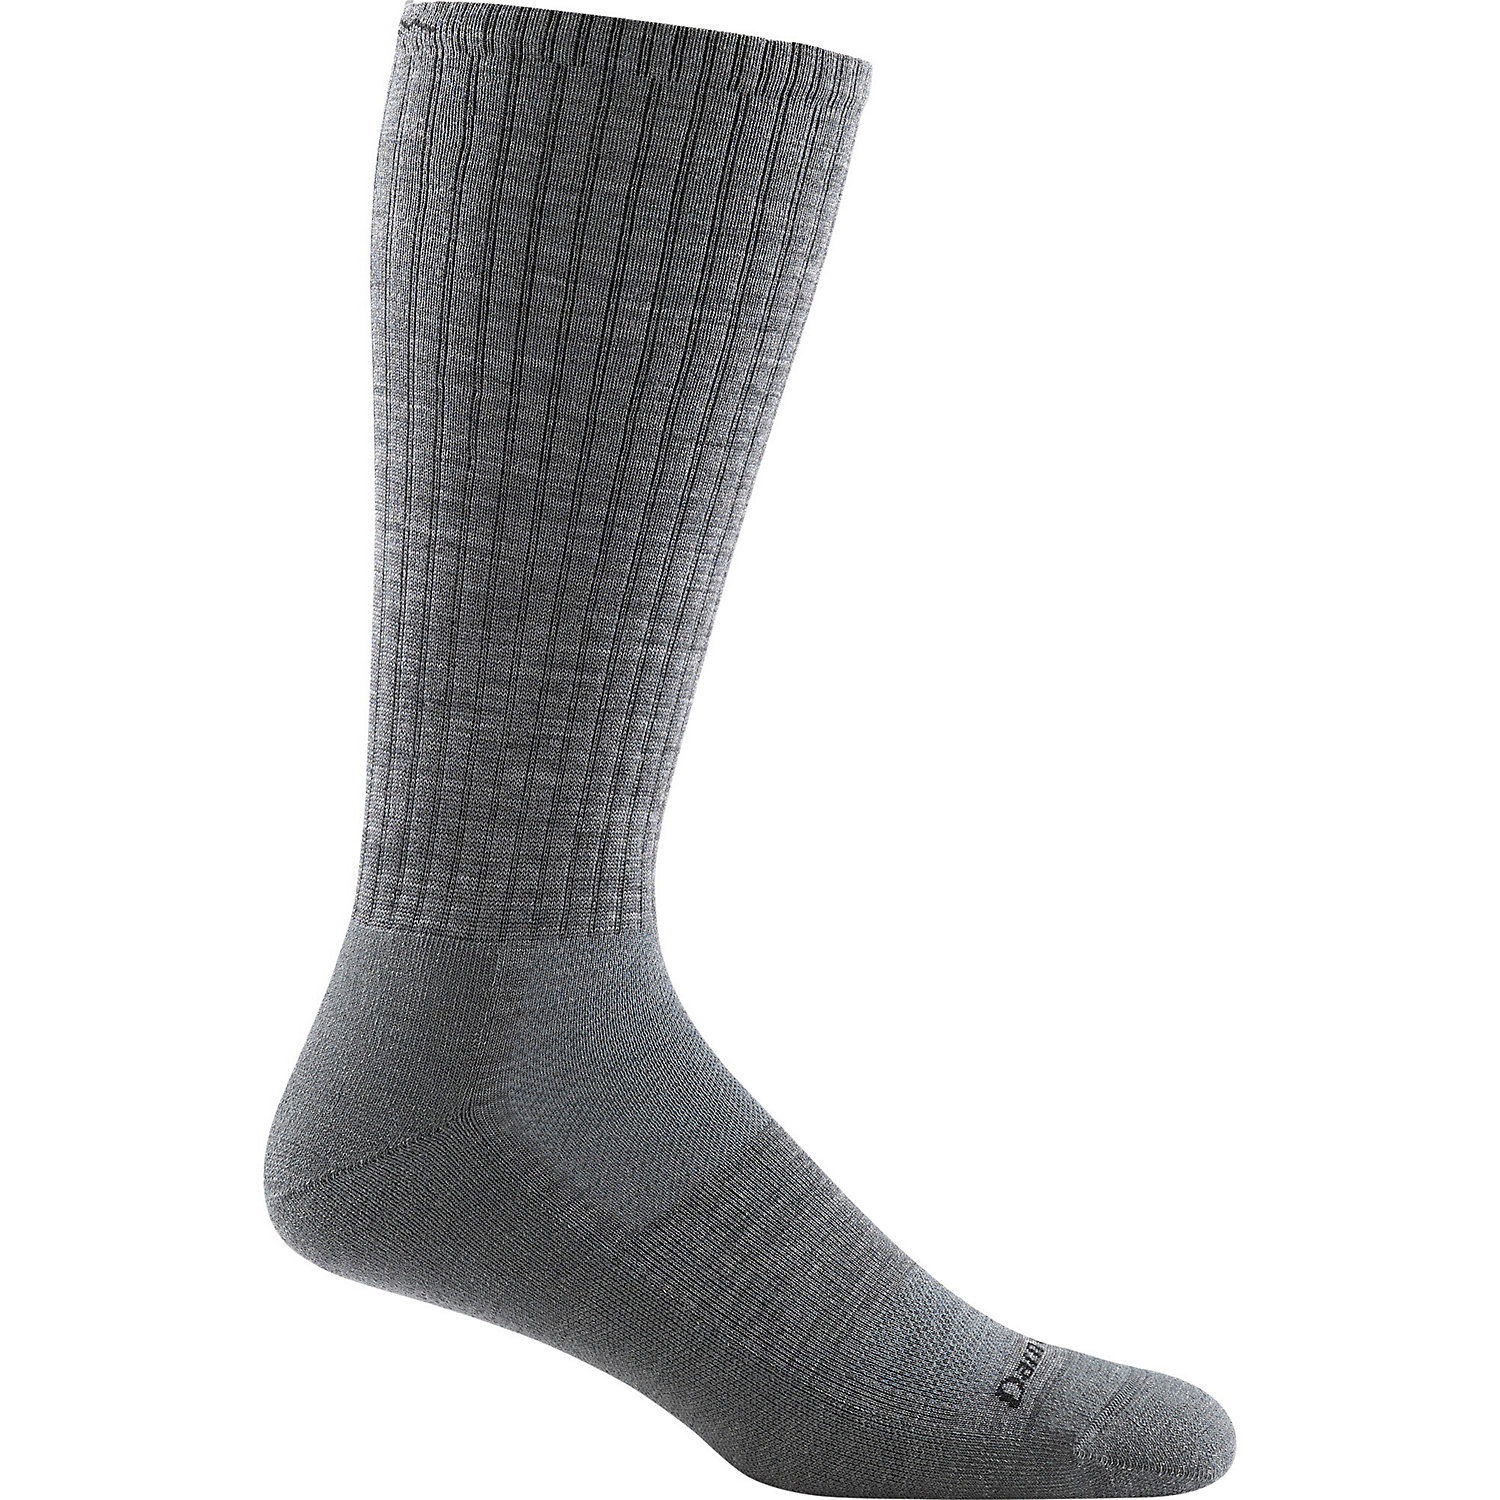 Darn Tough Vermont Darn Tough Mens Standard Issue Mid-Calf Light Sock